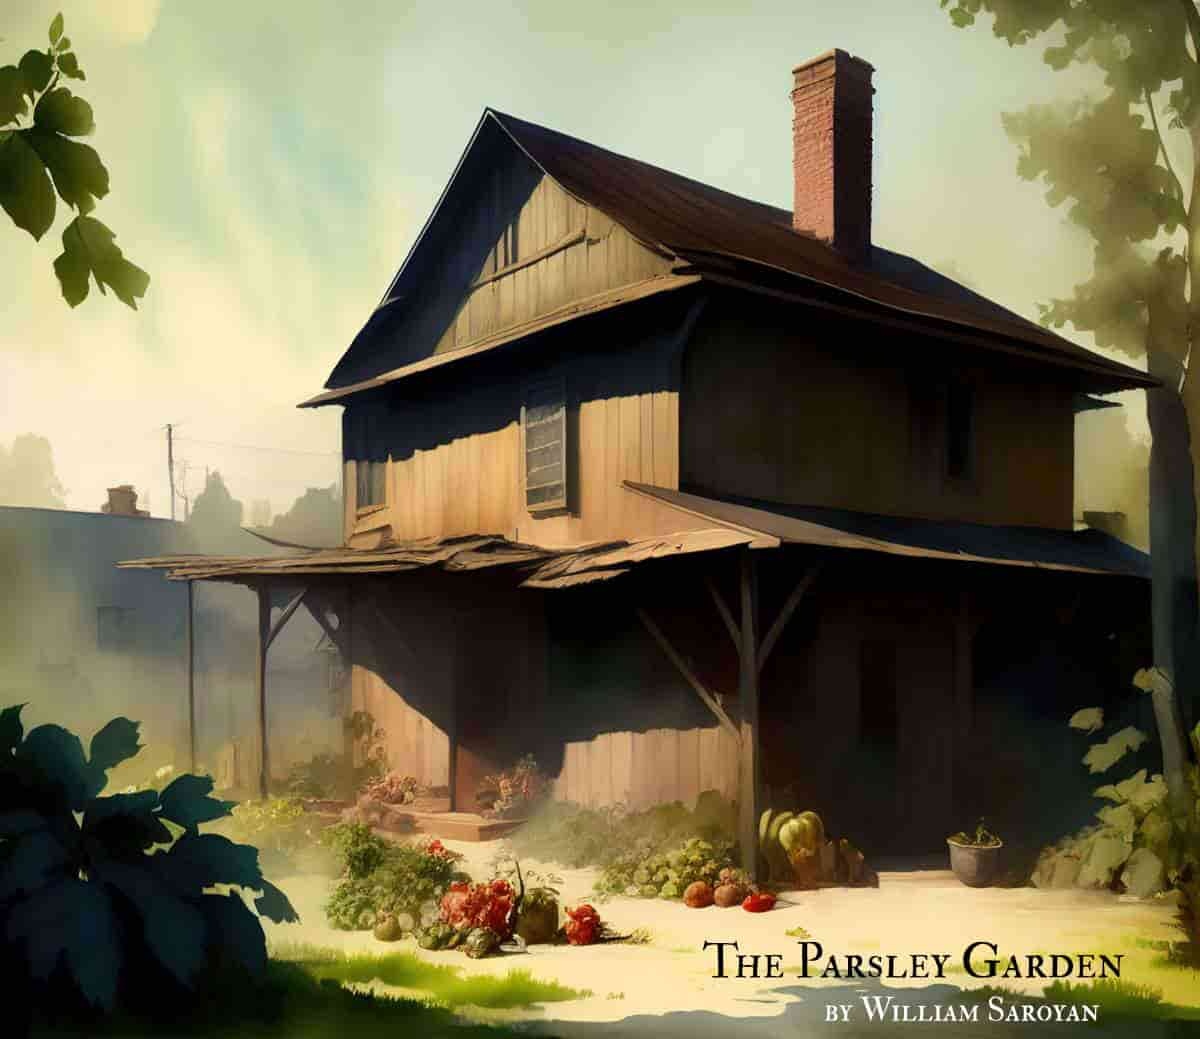 The Parsley Garden by William Saroyan Short Story Analysis